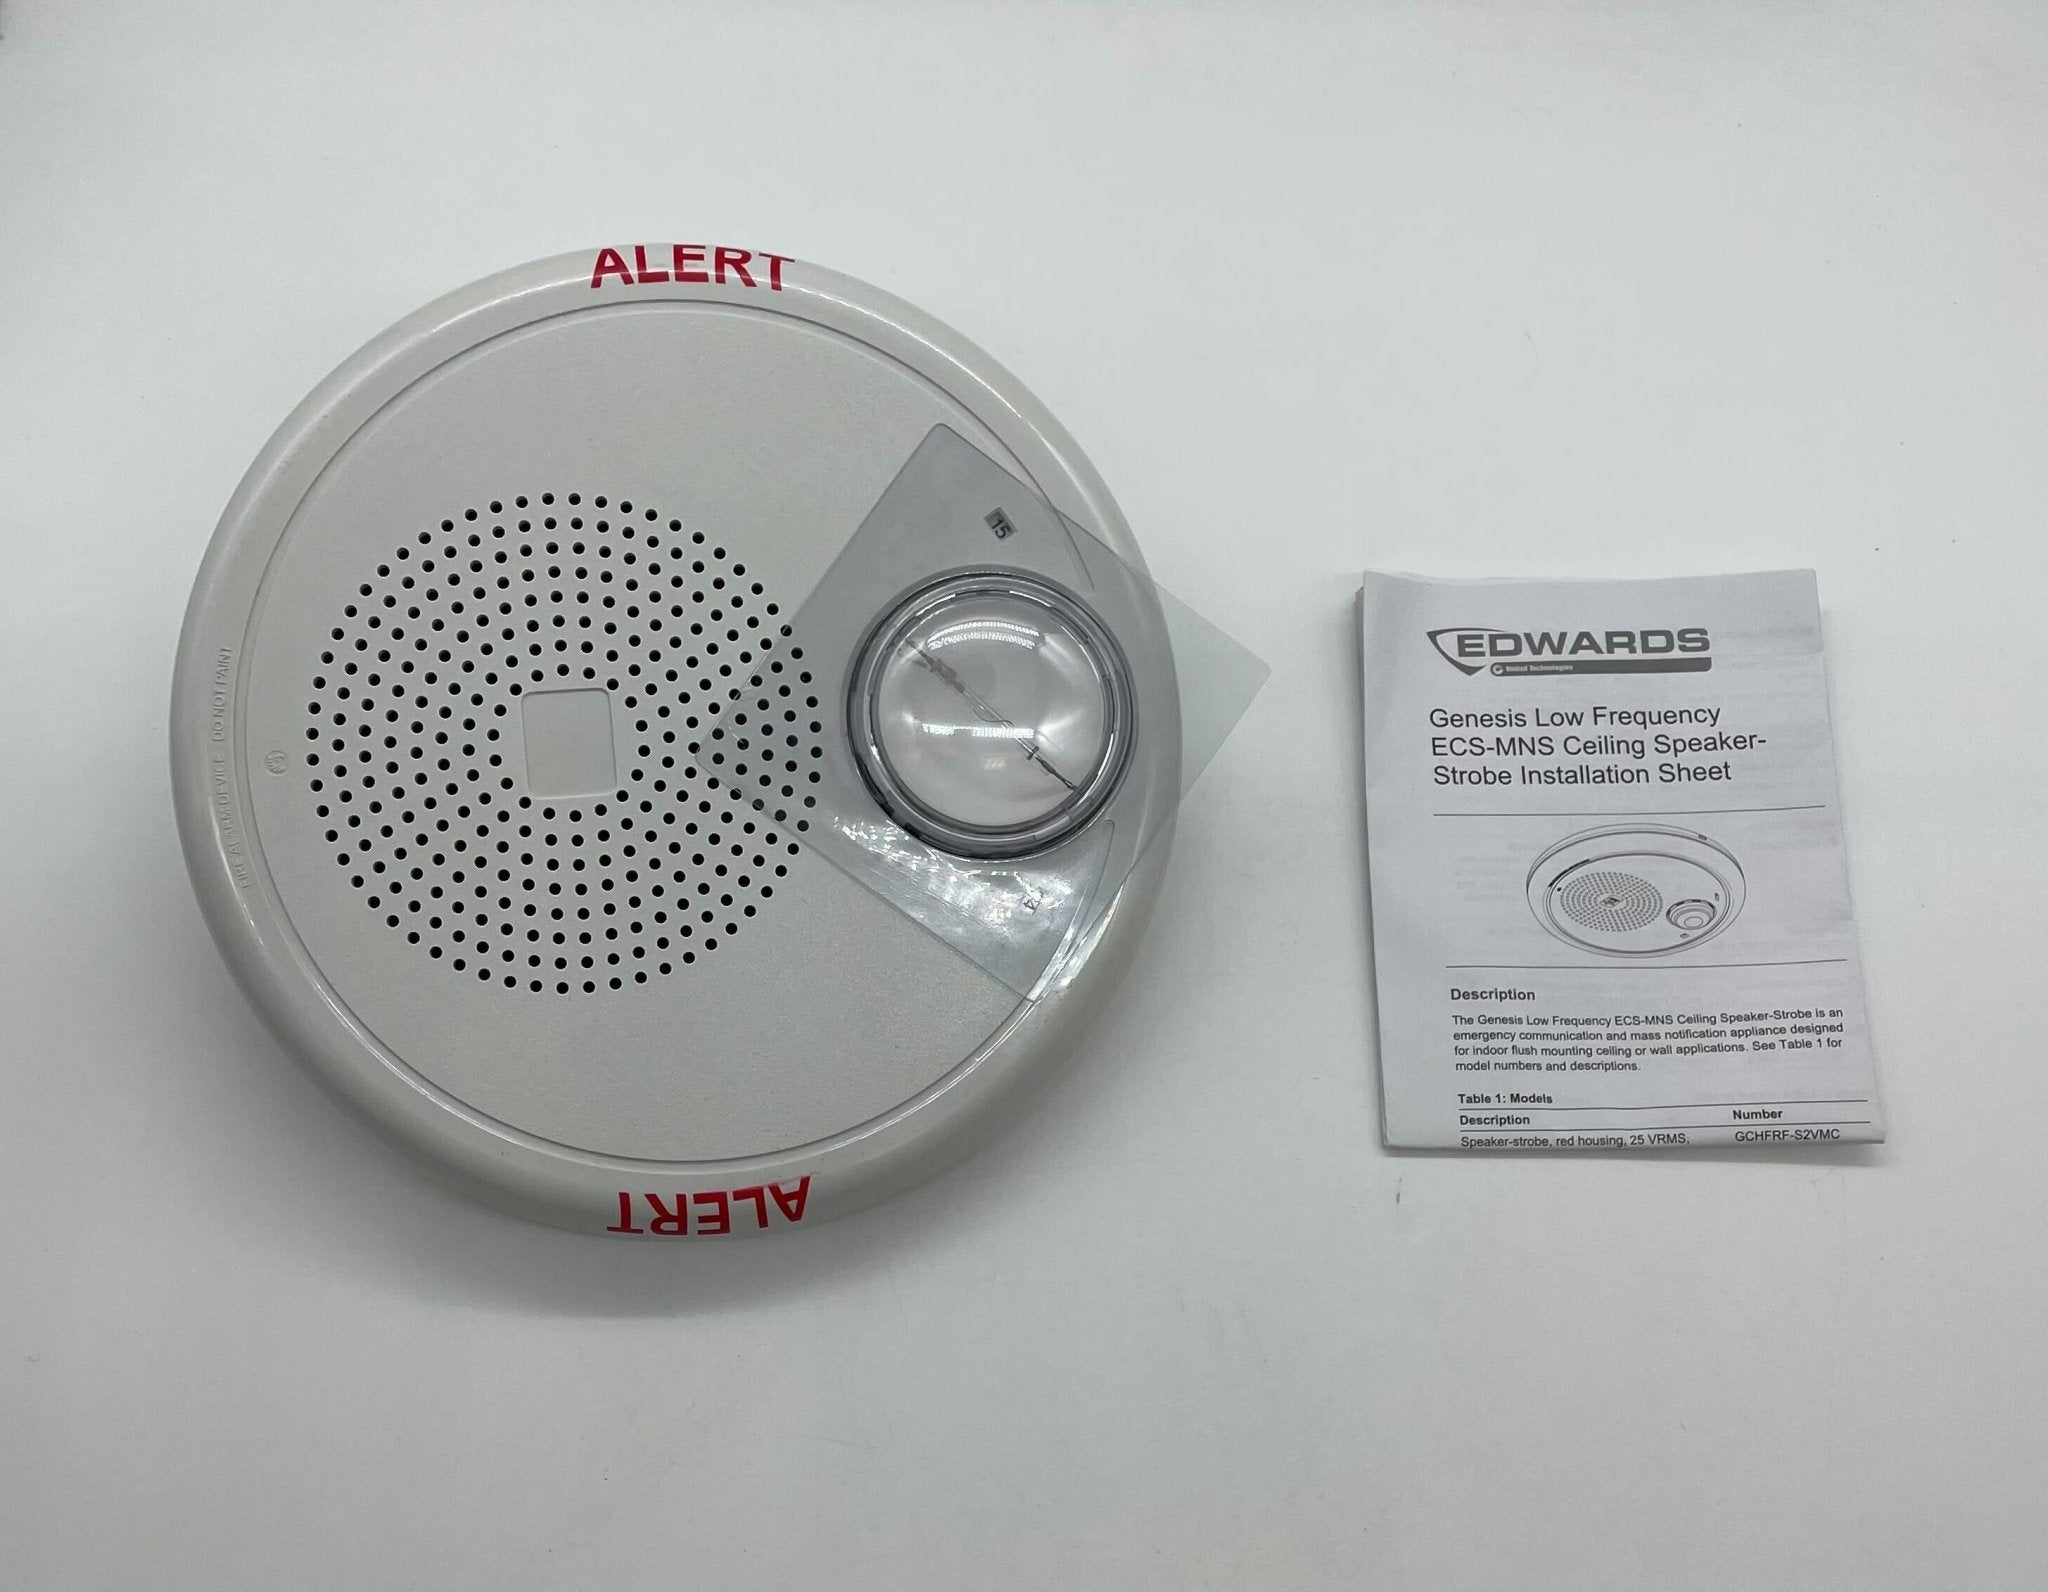 Edwards GCHFWA-S7VMC - The Fire Alarm Supplier